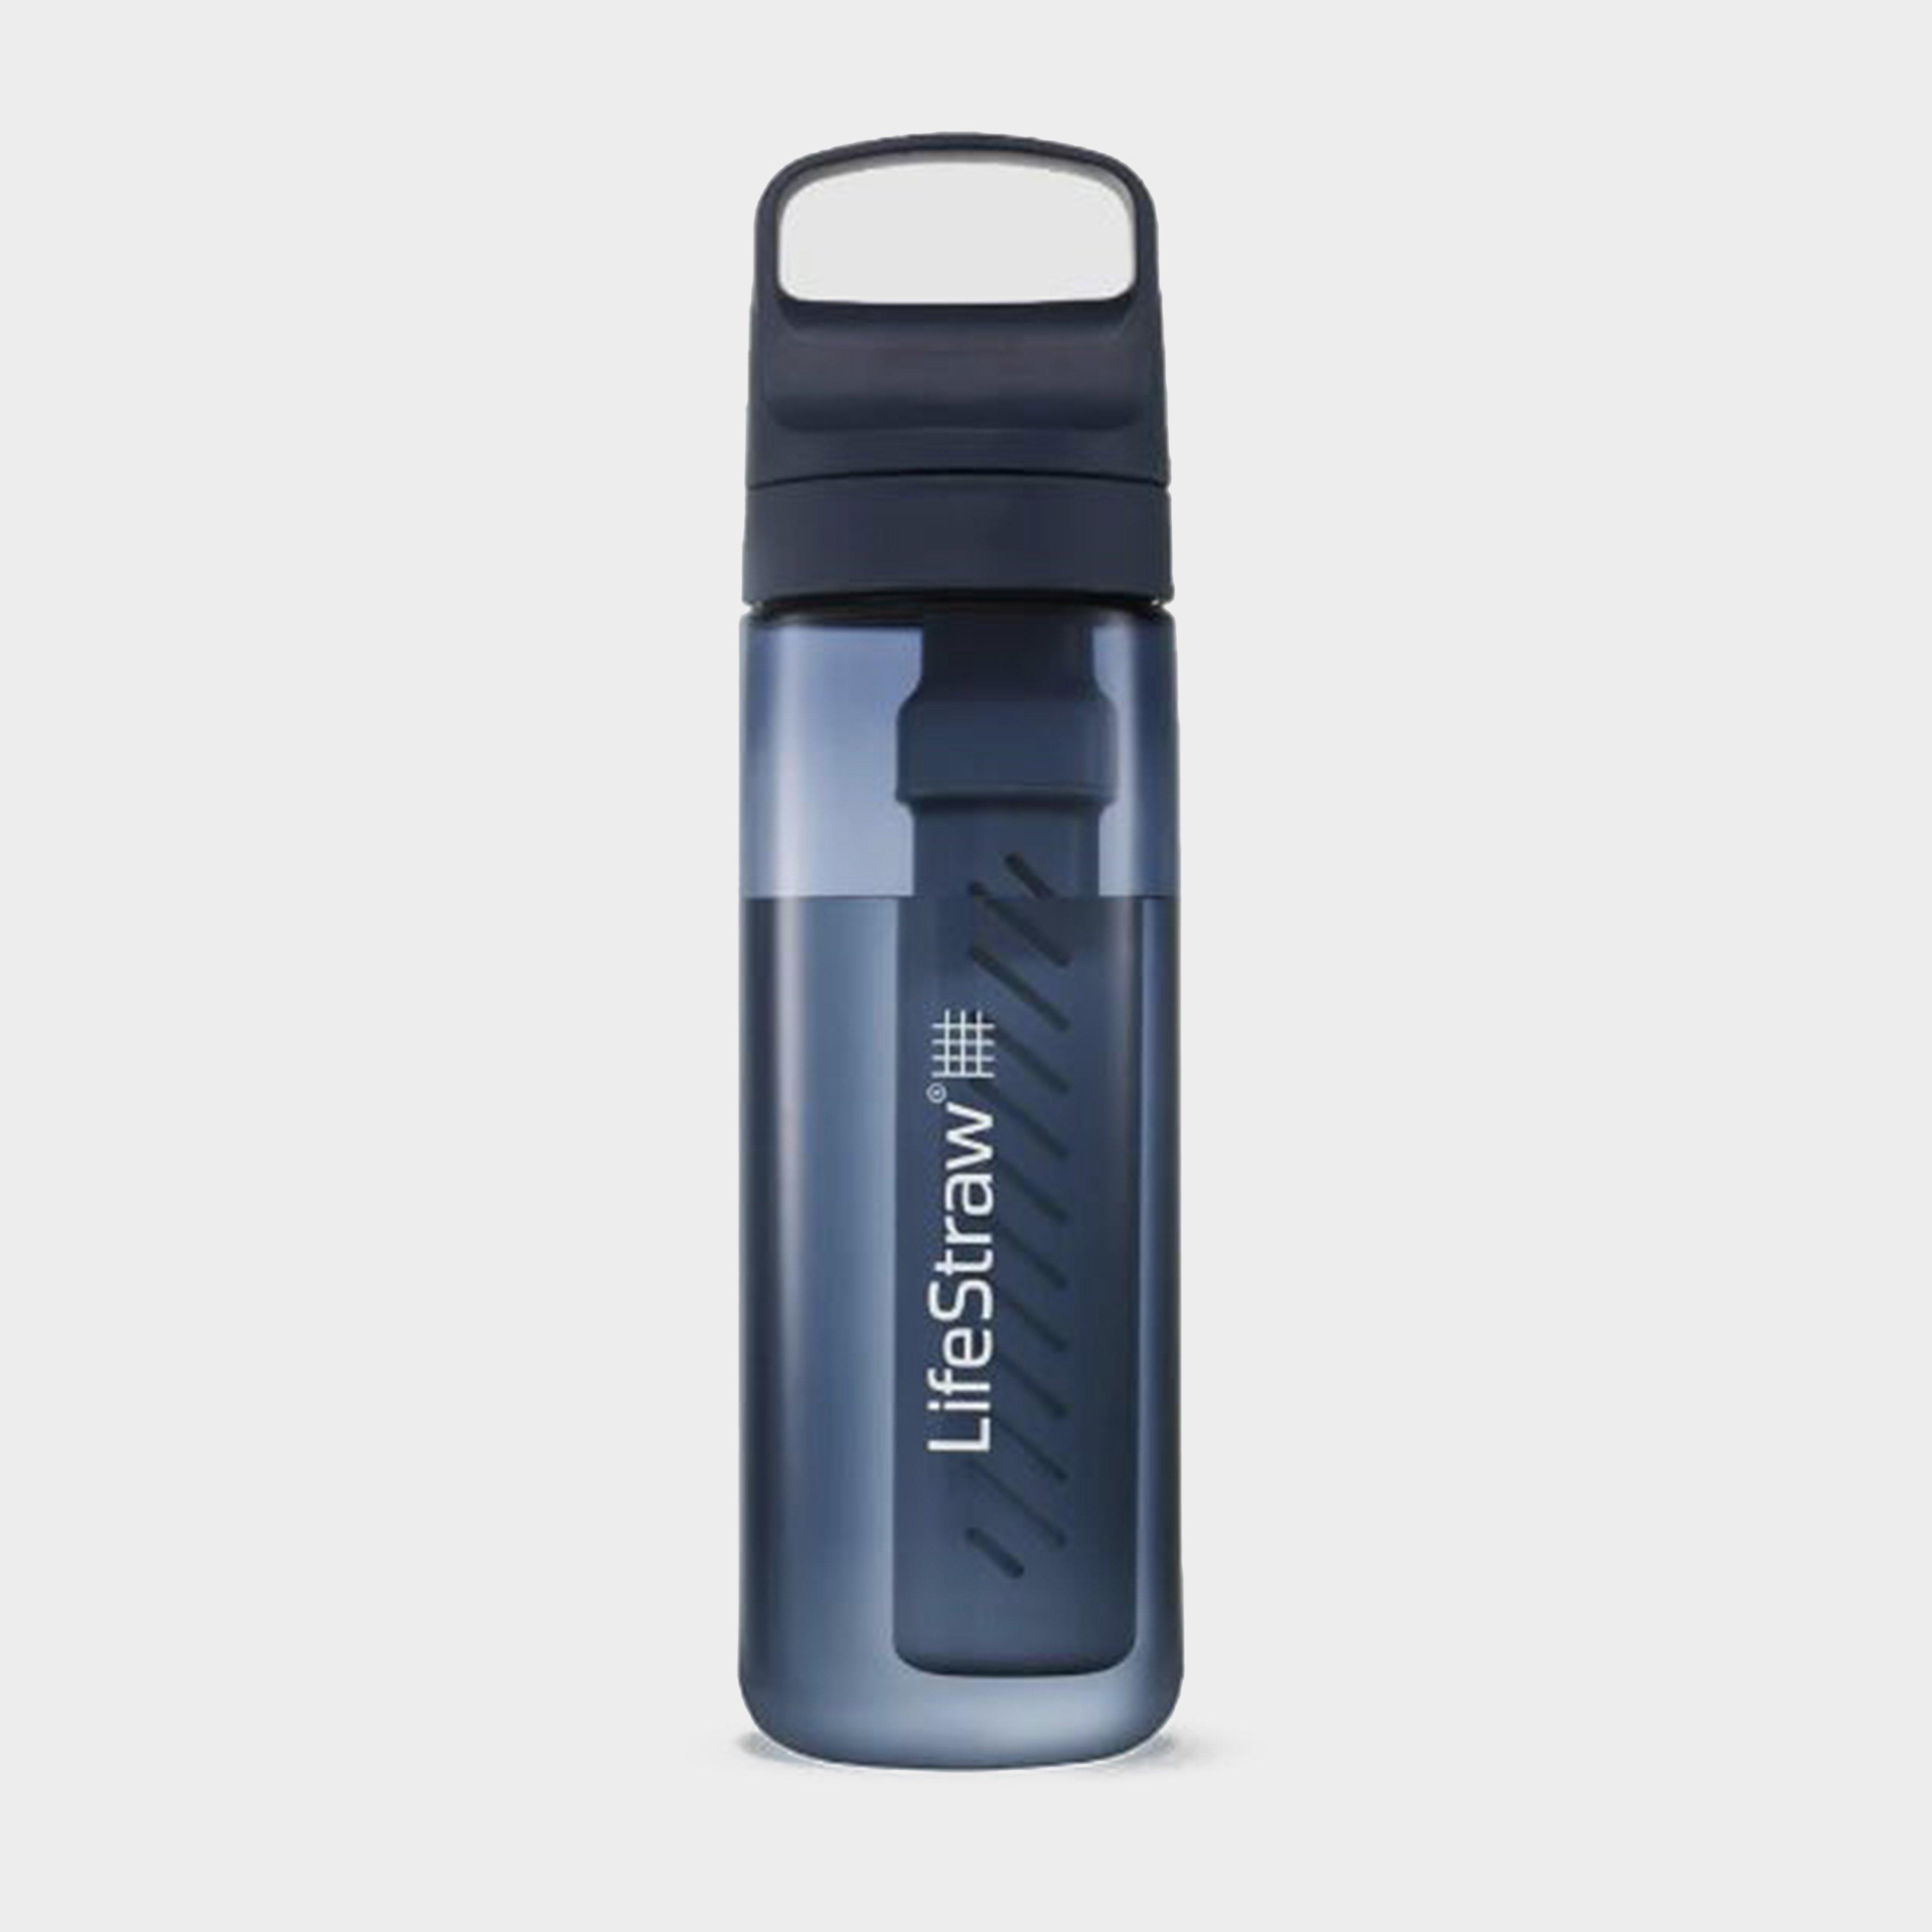  Lifestraw Go Series Water Filter Bottle - 650ml